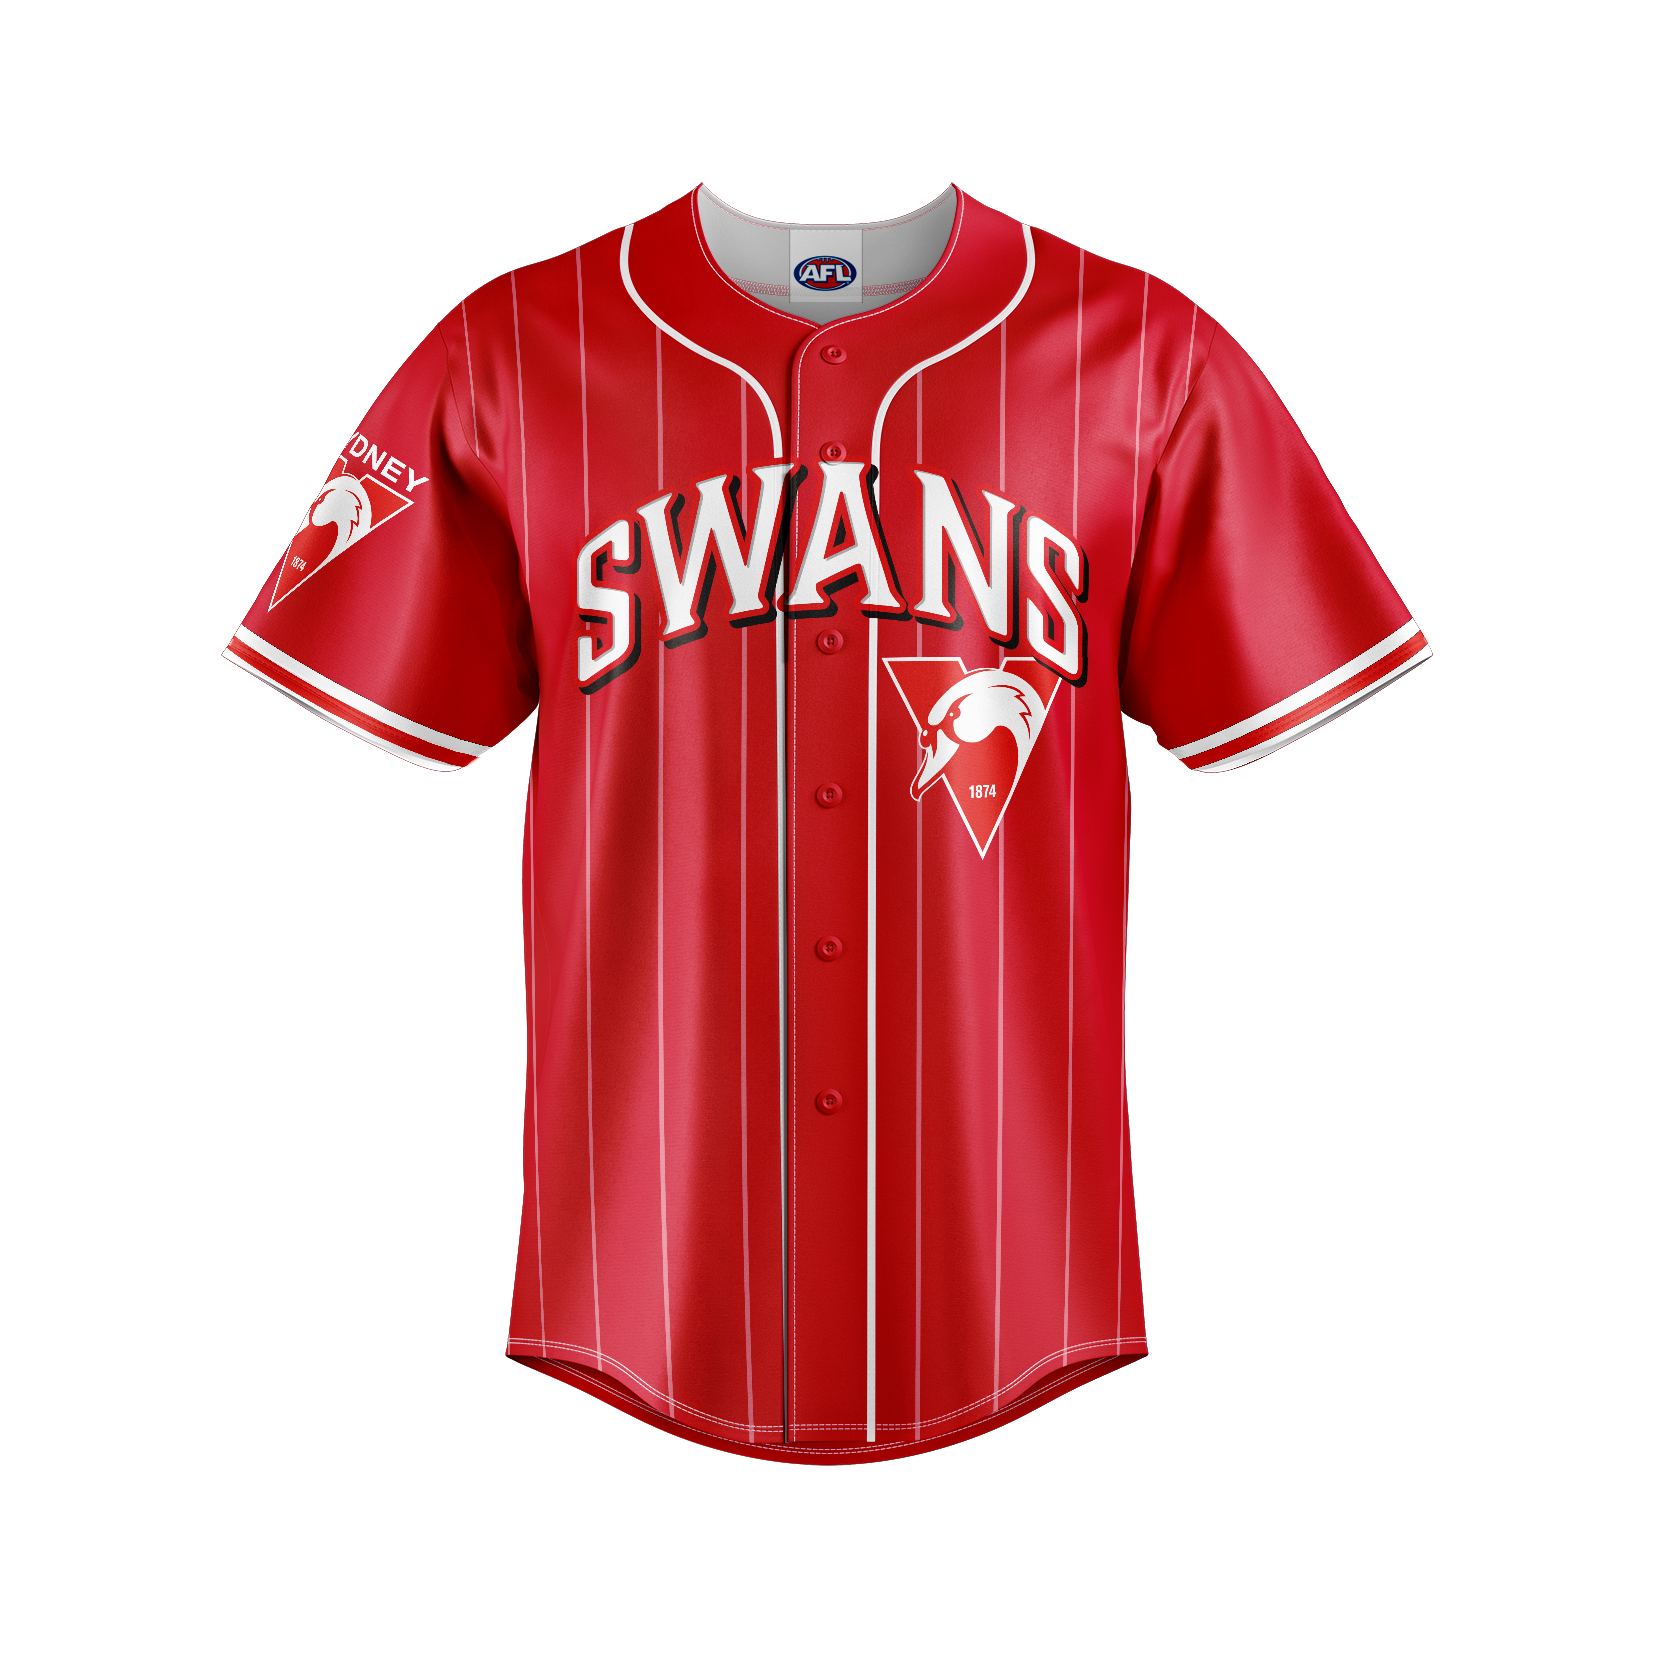 Sydney Swans Baseball "Slugger" Shirt